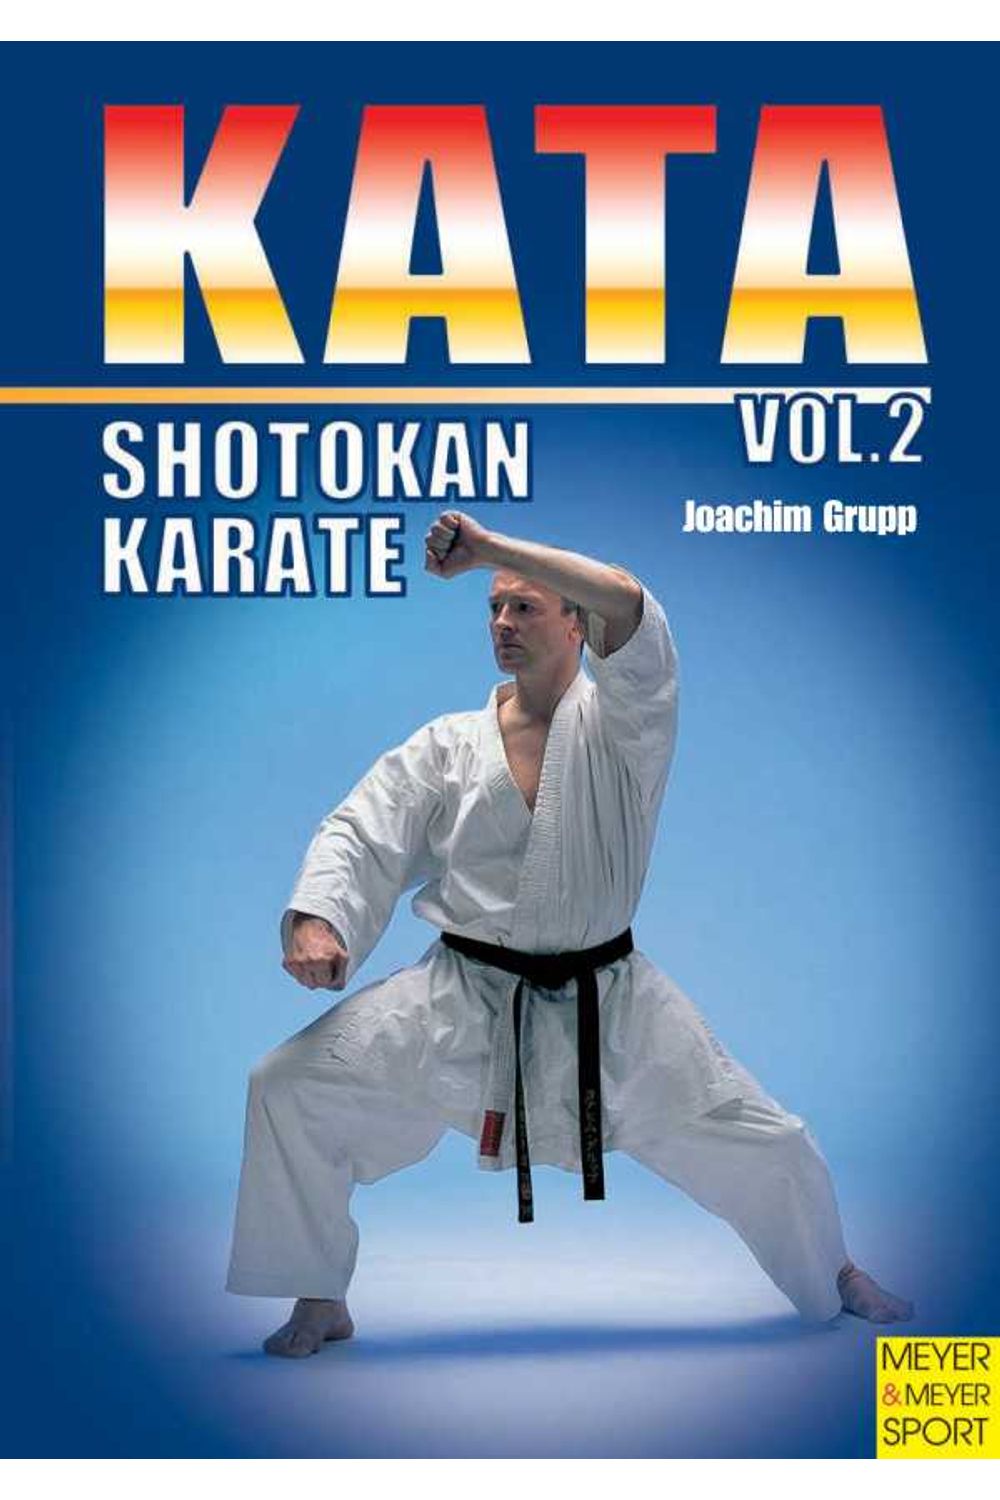 bw-shotokan-karate-kata-meyer-meyer-sport-9781841269658